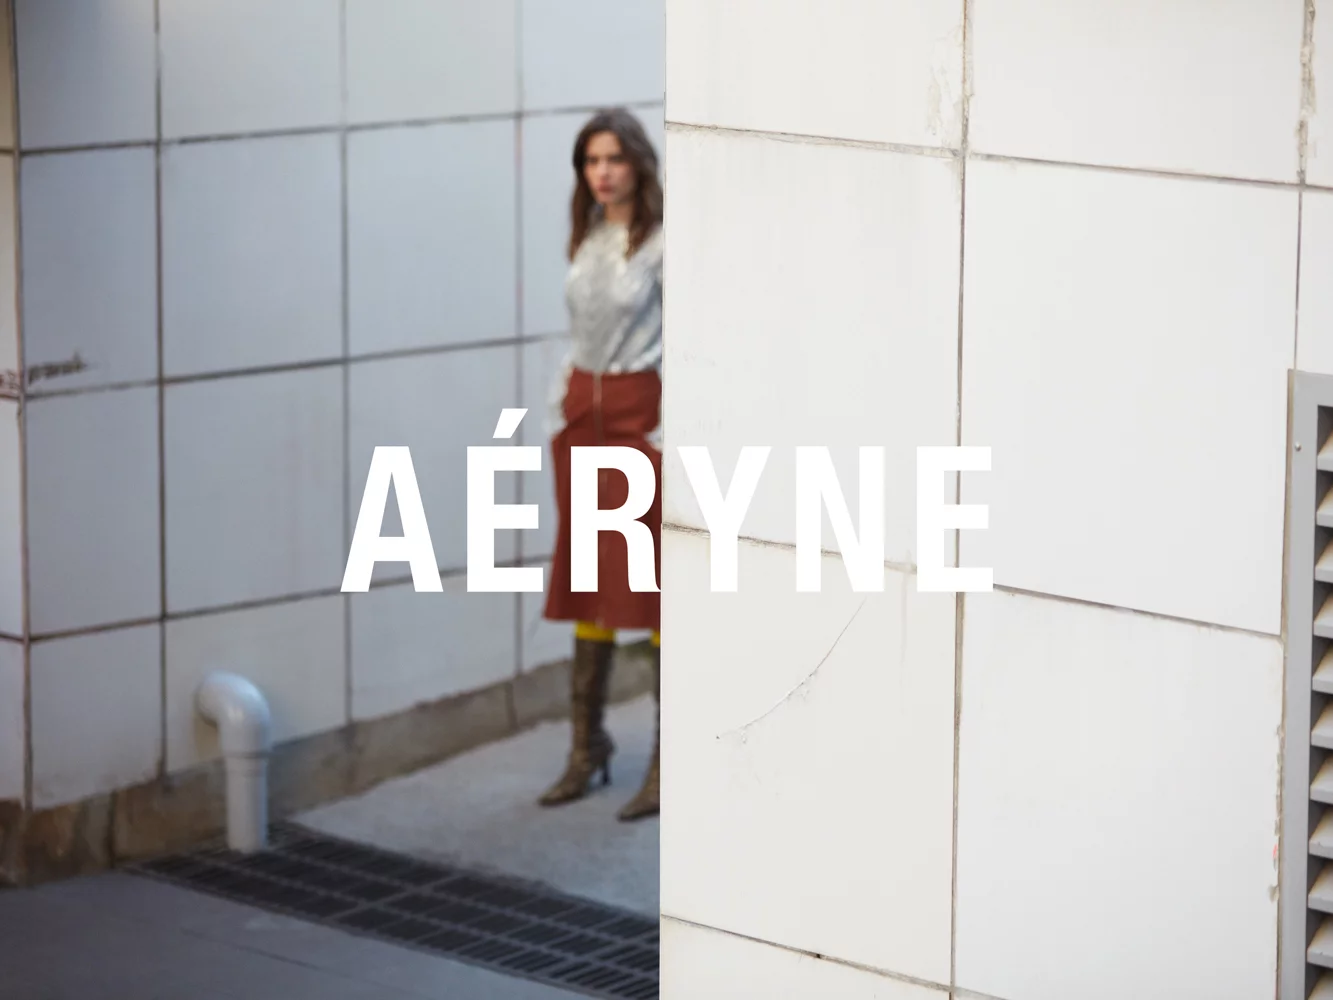 Aéryne 3 by Pelle LANNEFORS